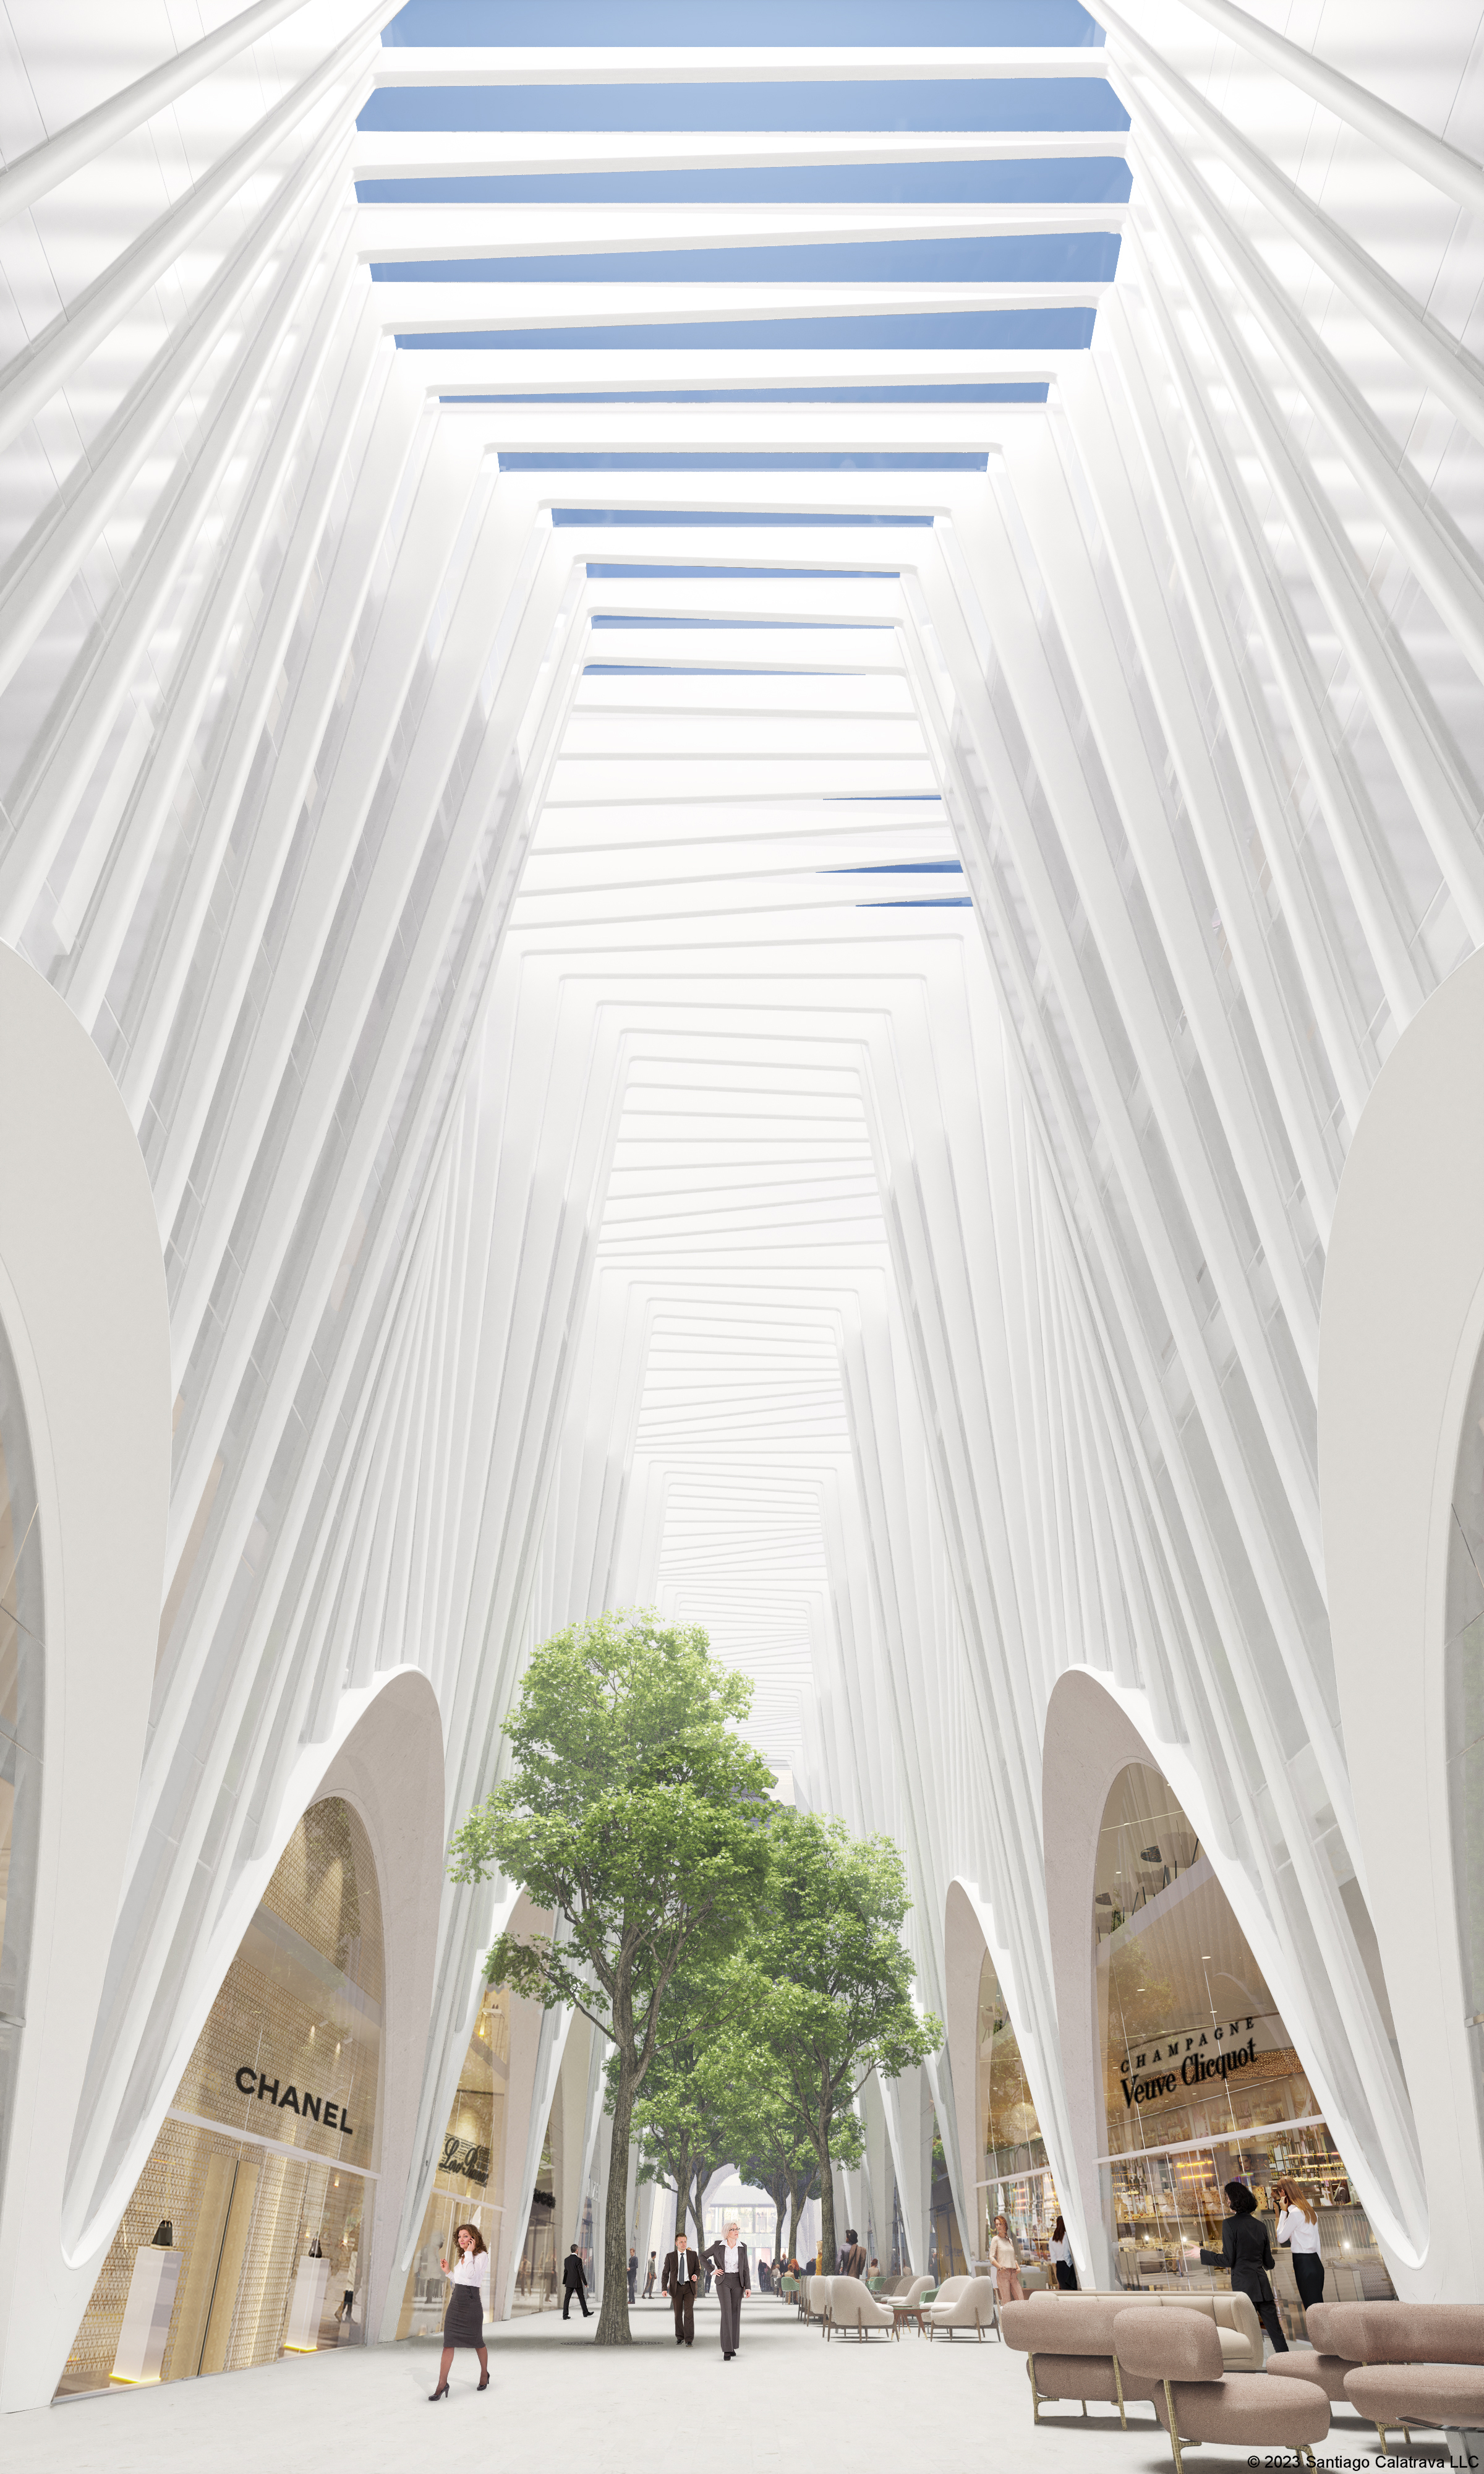 Calatrava Boulevard retail and office development, Interior Roof Open, by Santiago Calatrava and CENTRUM Group